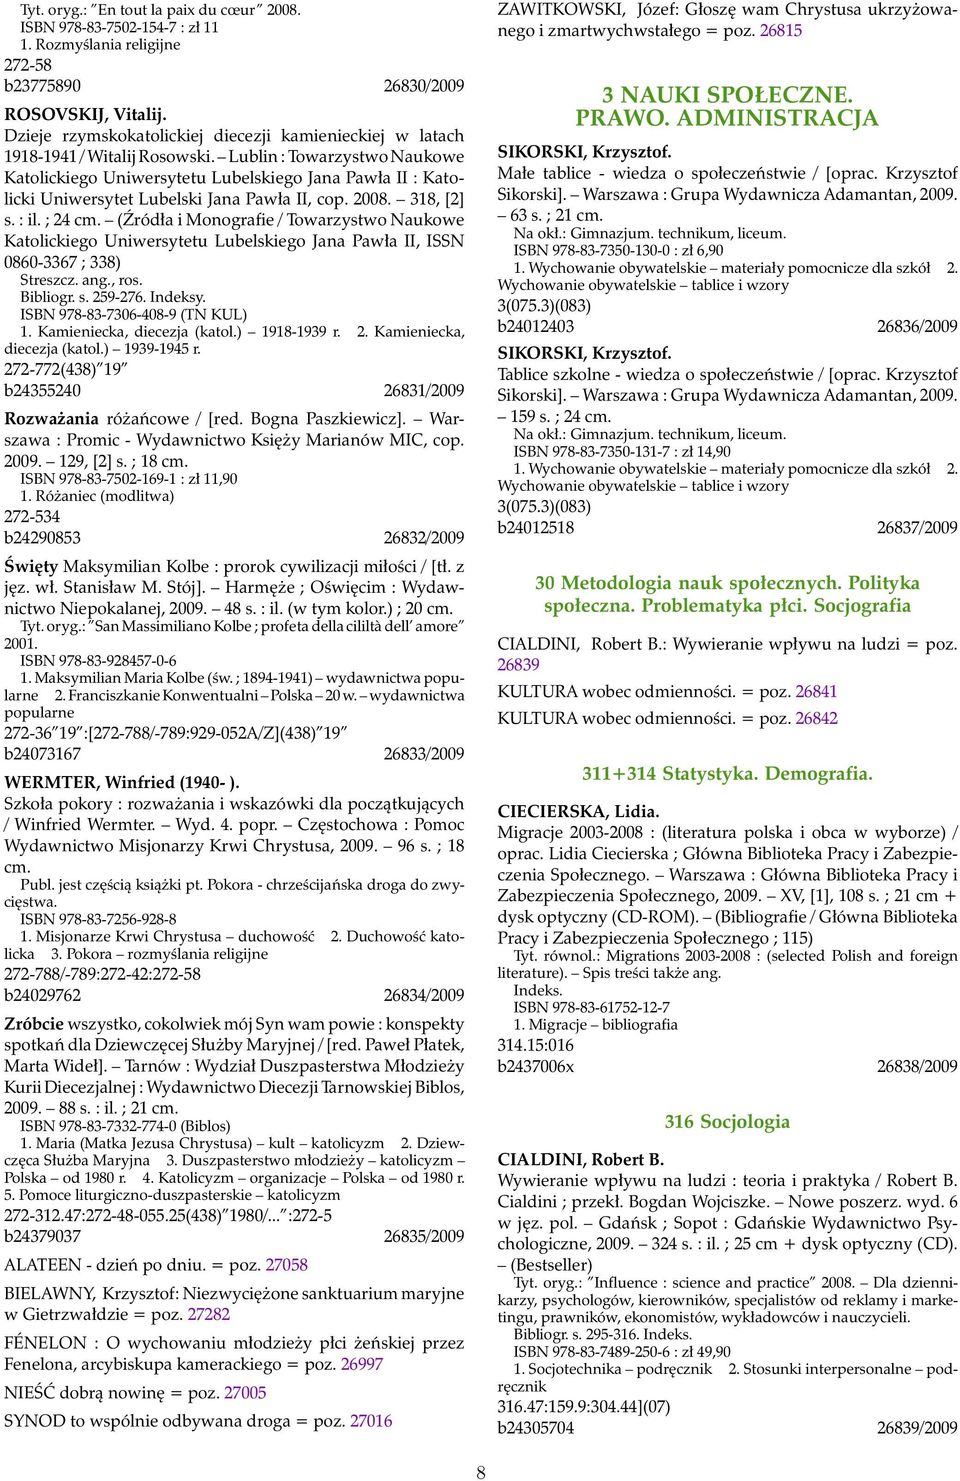 Lublin : Towarzystwo Naukowe Katolickiego Uniwersytetu Lubelskiego Jana Pawła II : Katolicki Uniwersytet Lubelski Jana Pawła II, cop. 2008. 318, [2] s. : il. ; 24 cm.